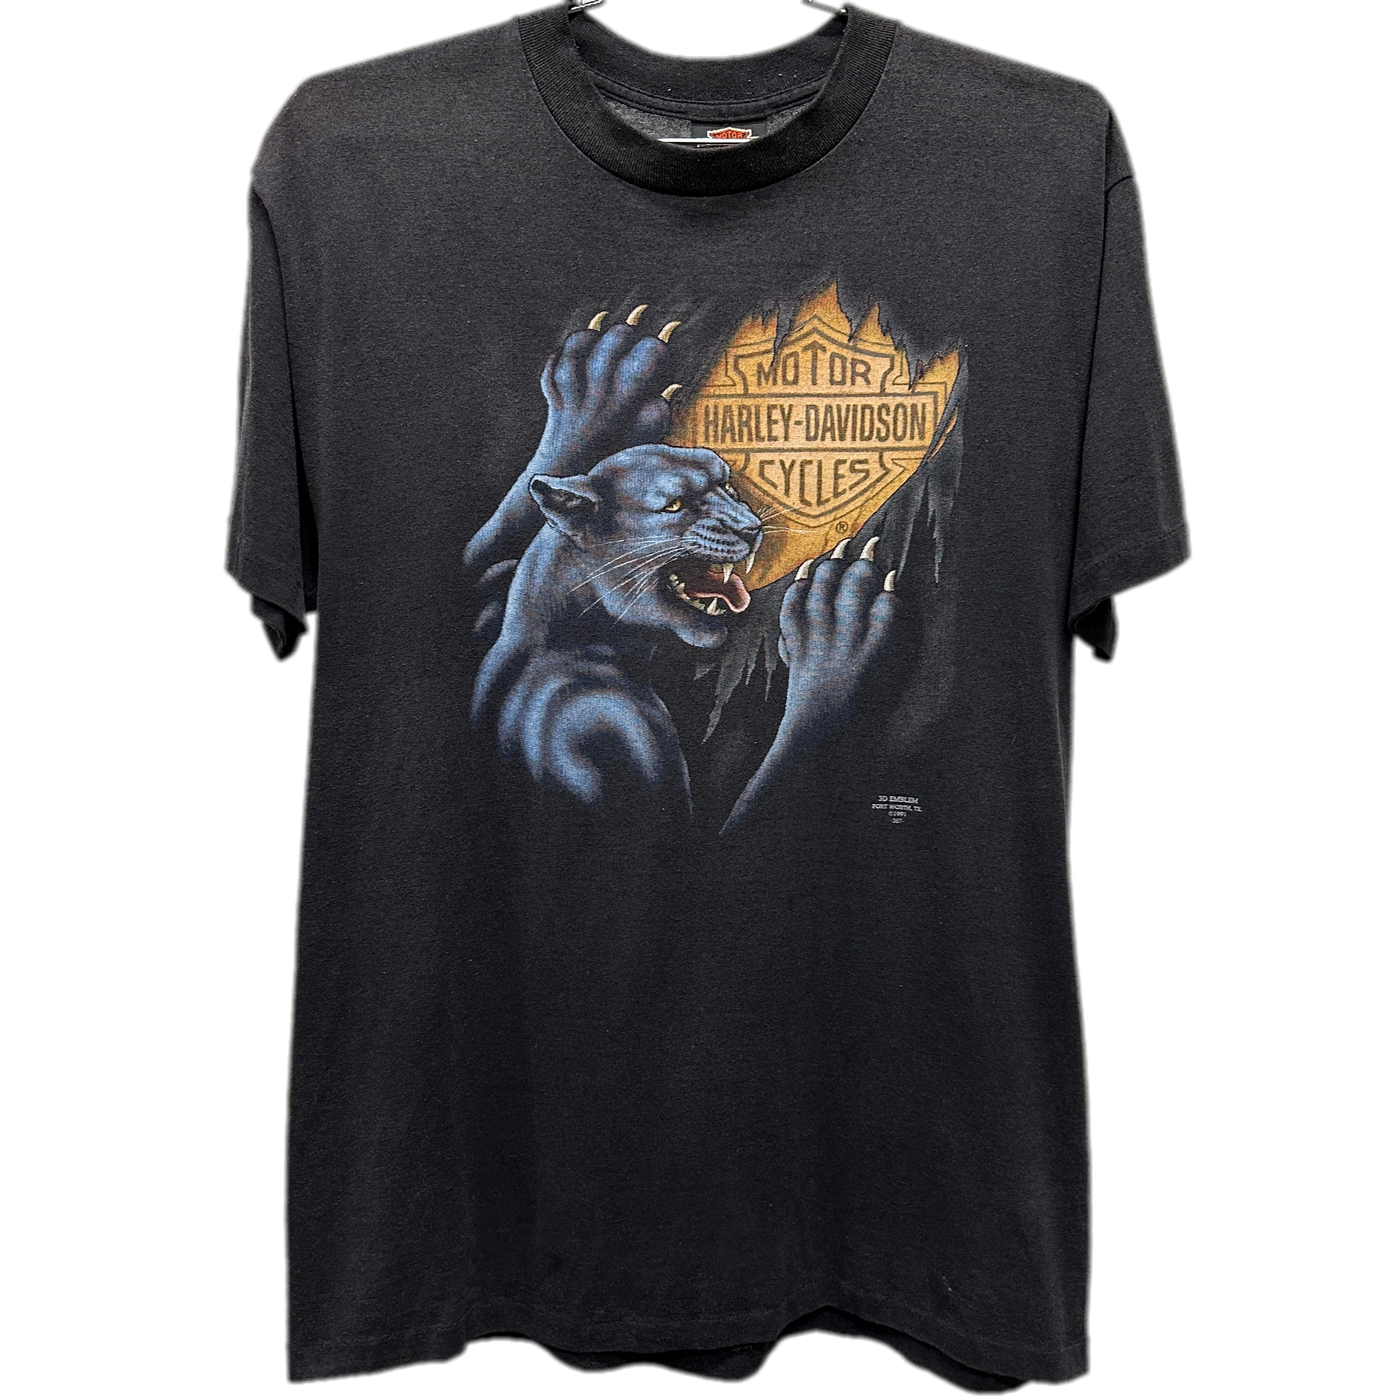 '91 Harley Davidson 3D Emblem Panther Black T-shirt sz XL